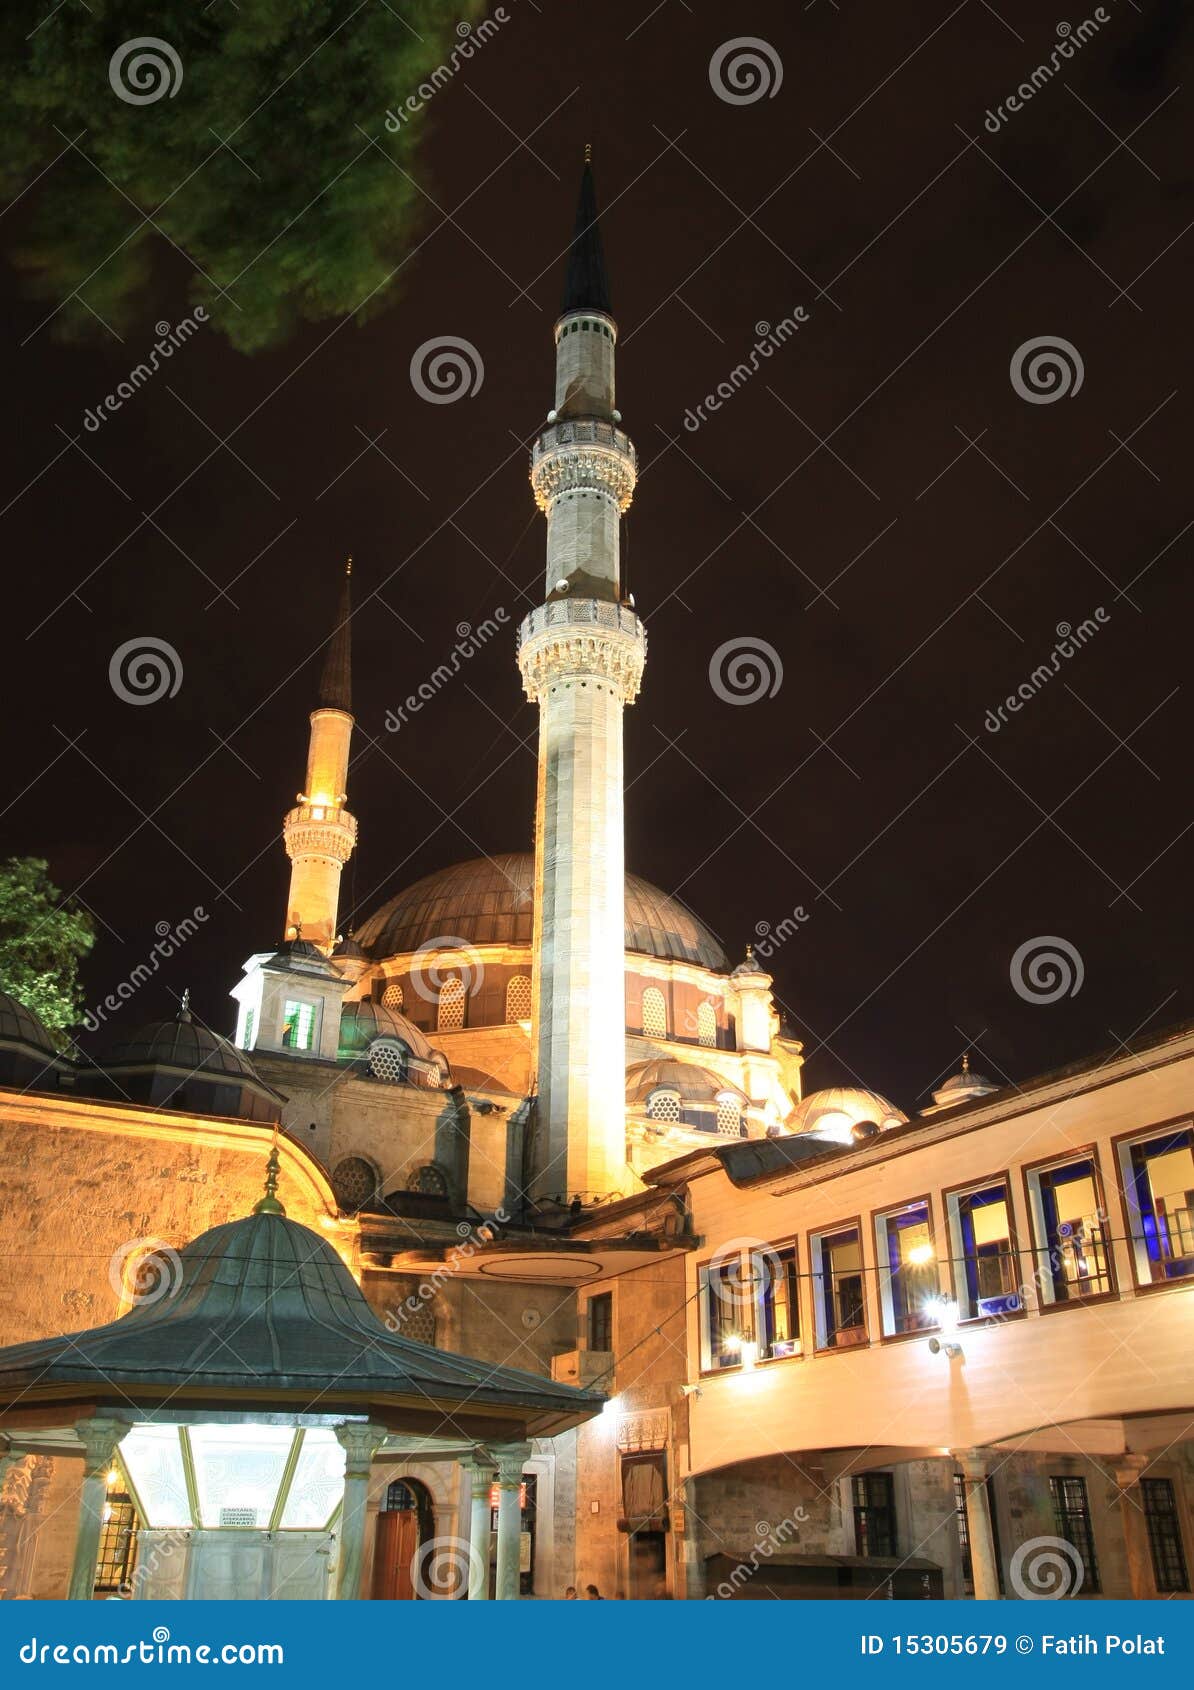 eyup sultan mosque at night, istanbul, turkey